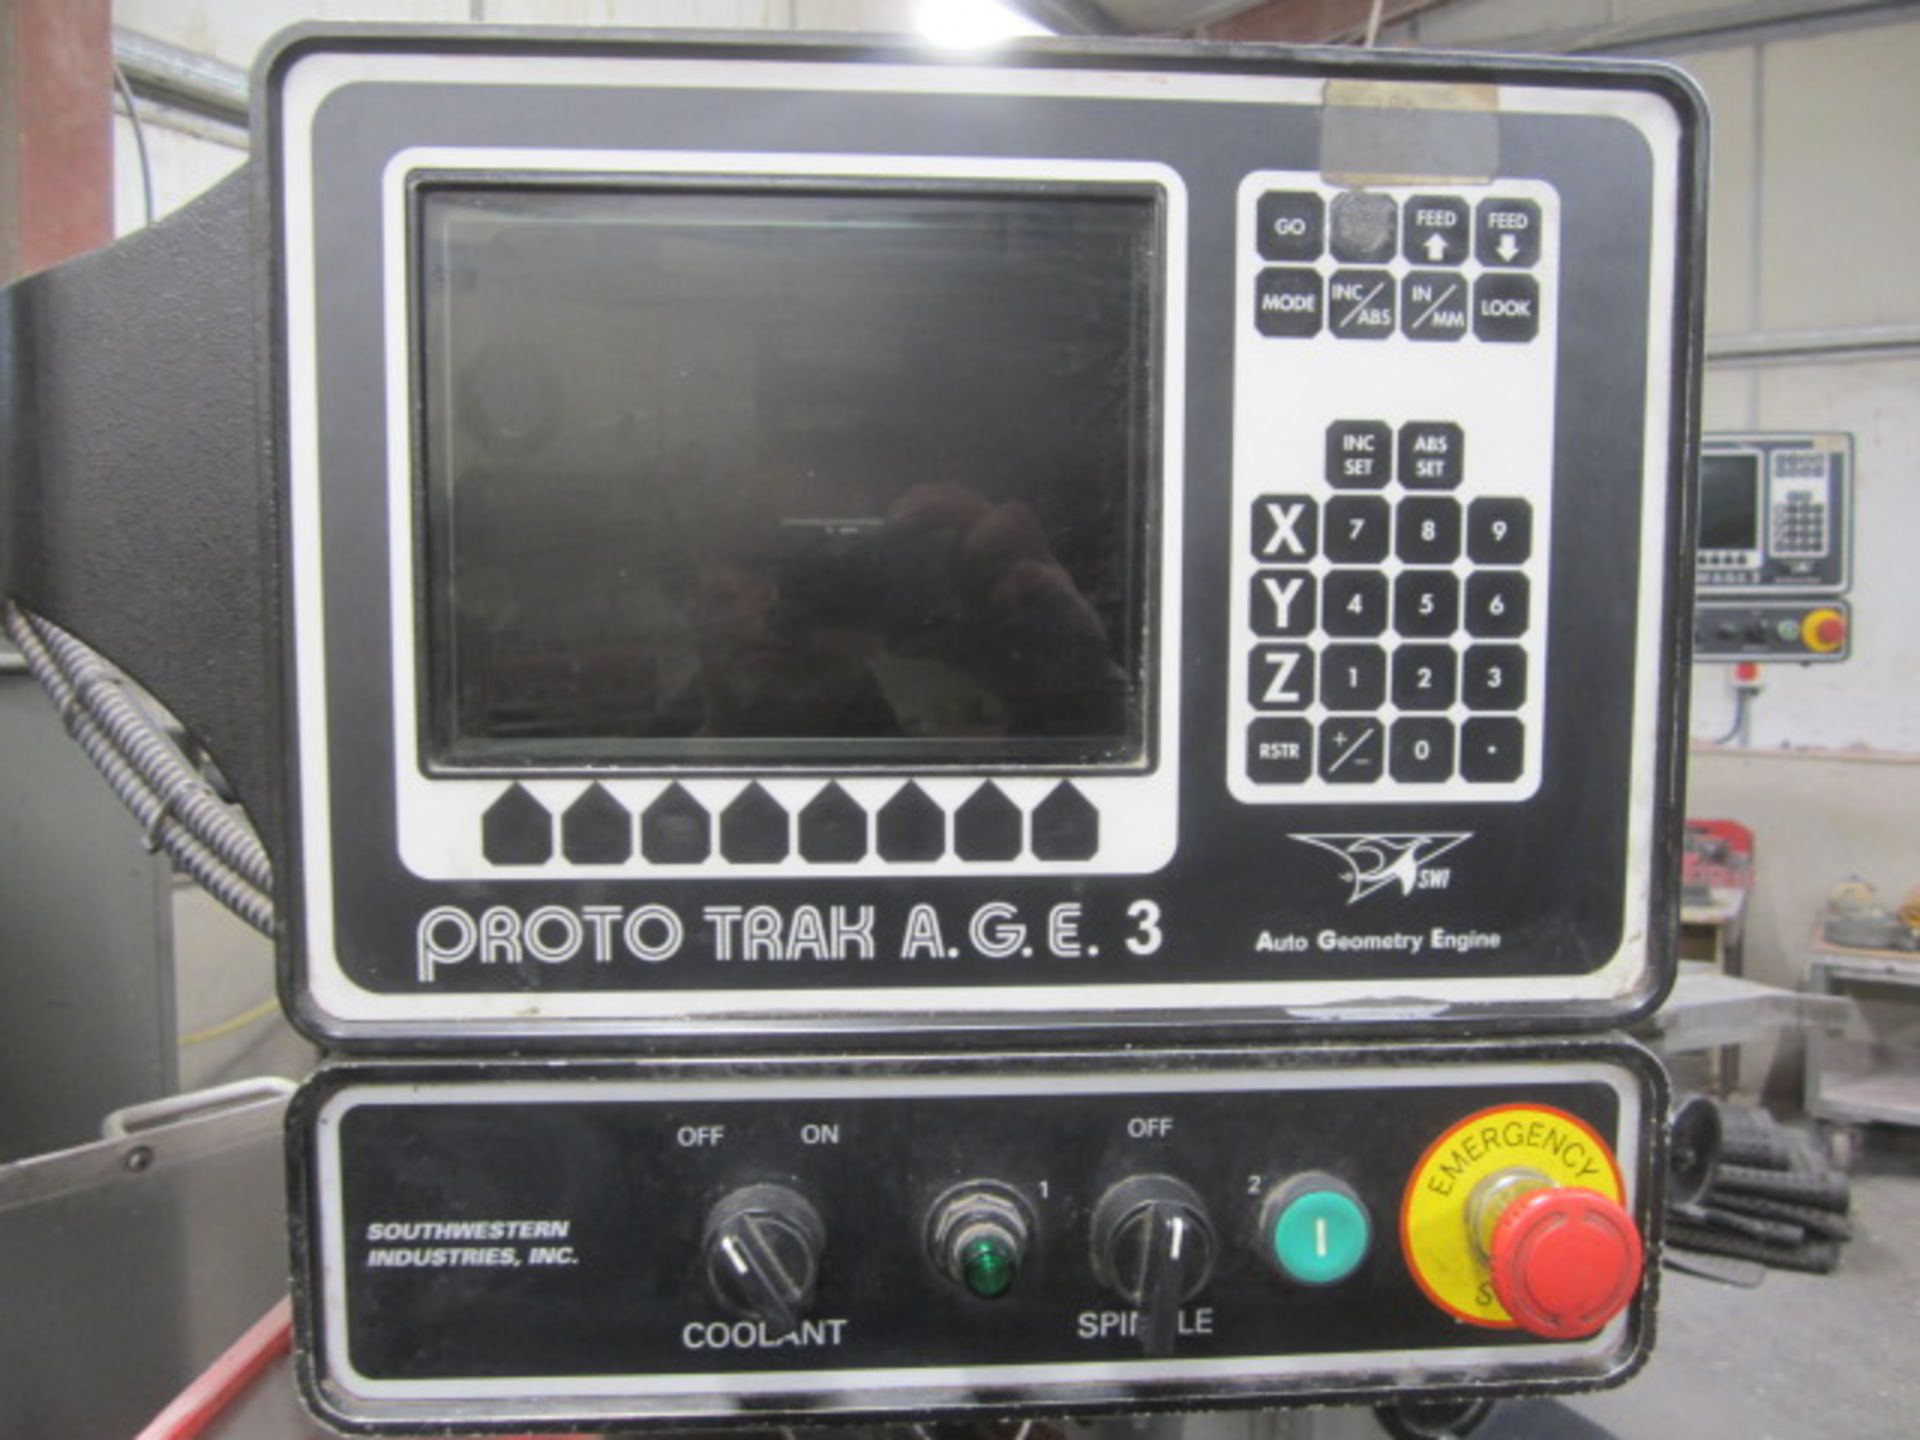 King Rich DPM CNC turret head vertical milling machine, serial no. 9504 (2001), Prototrak A.G.E.3 - Image 5 of 8